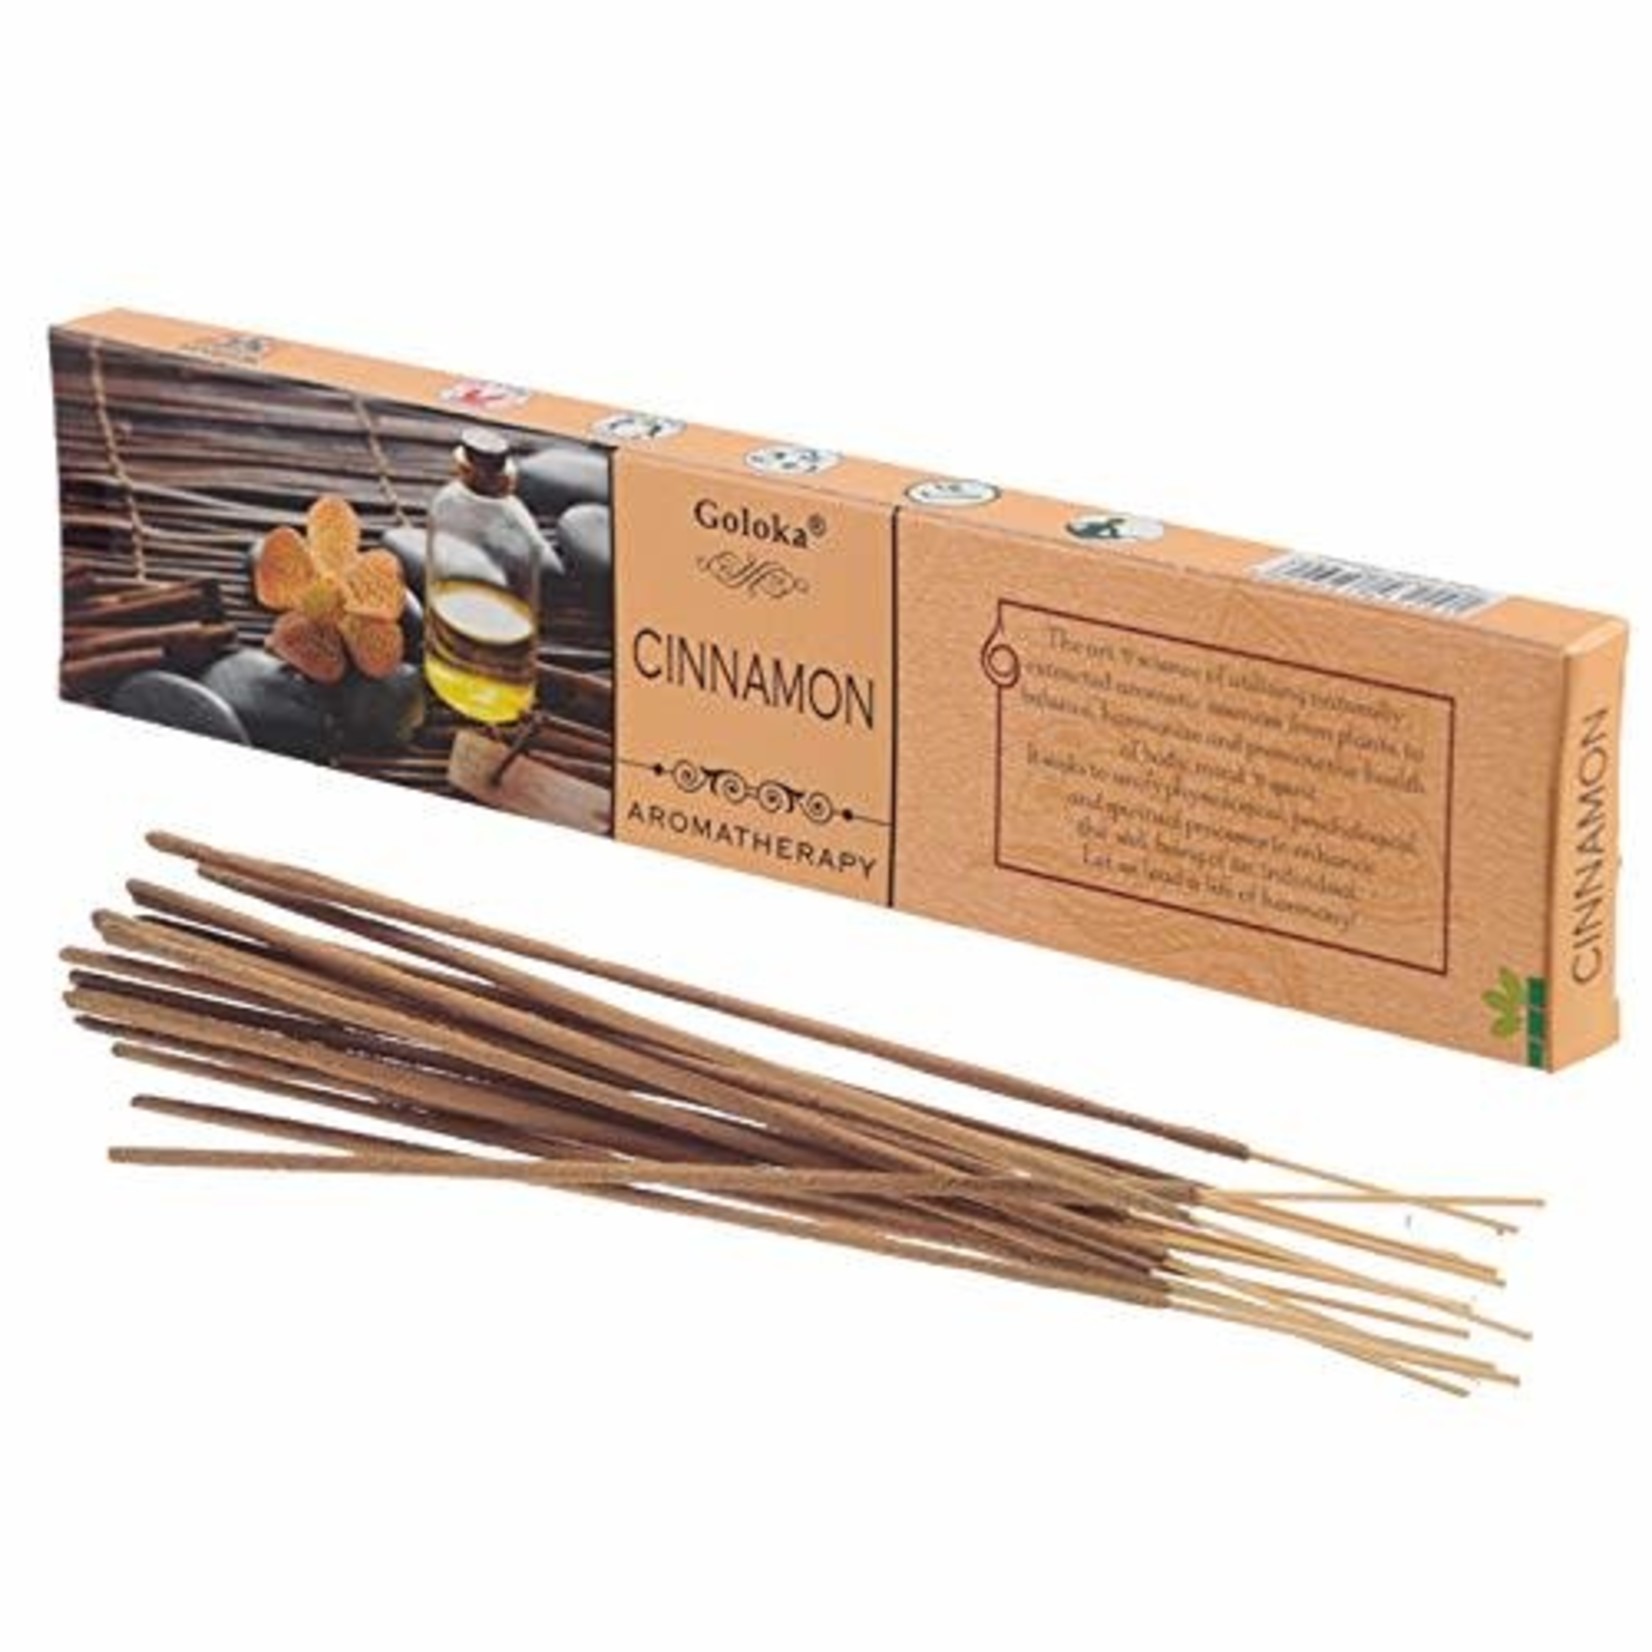 Aromatherapy Cinnamon Incense Sticks- Goloka